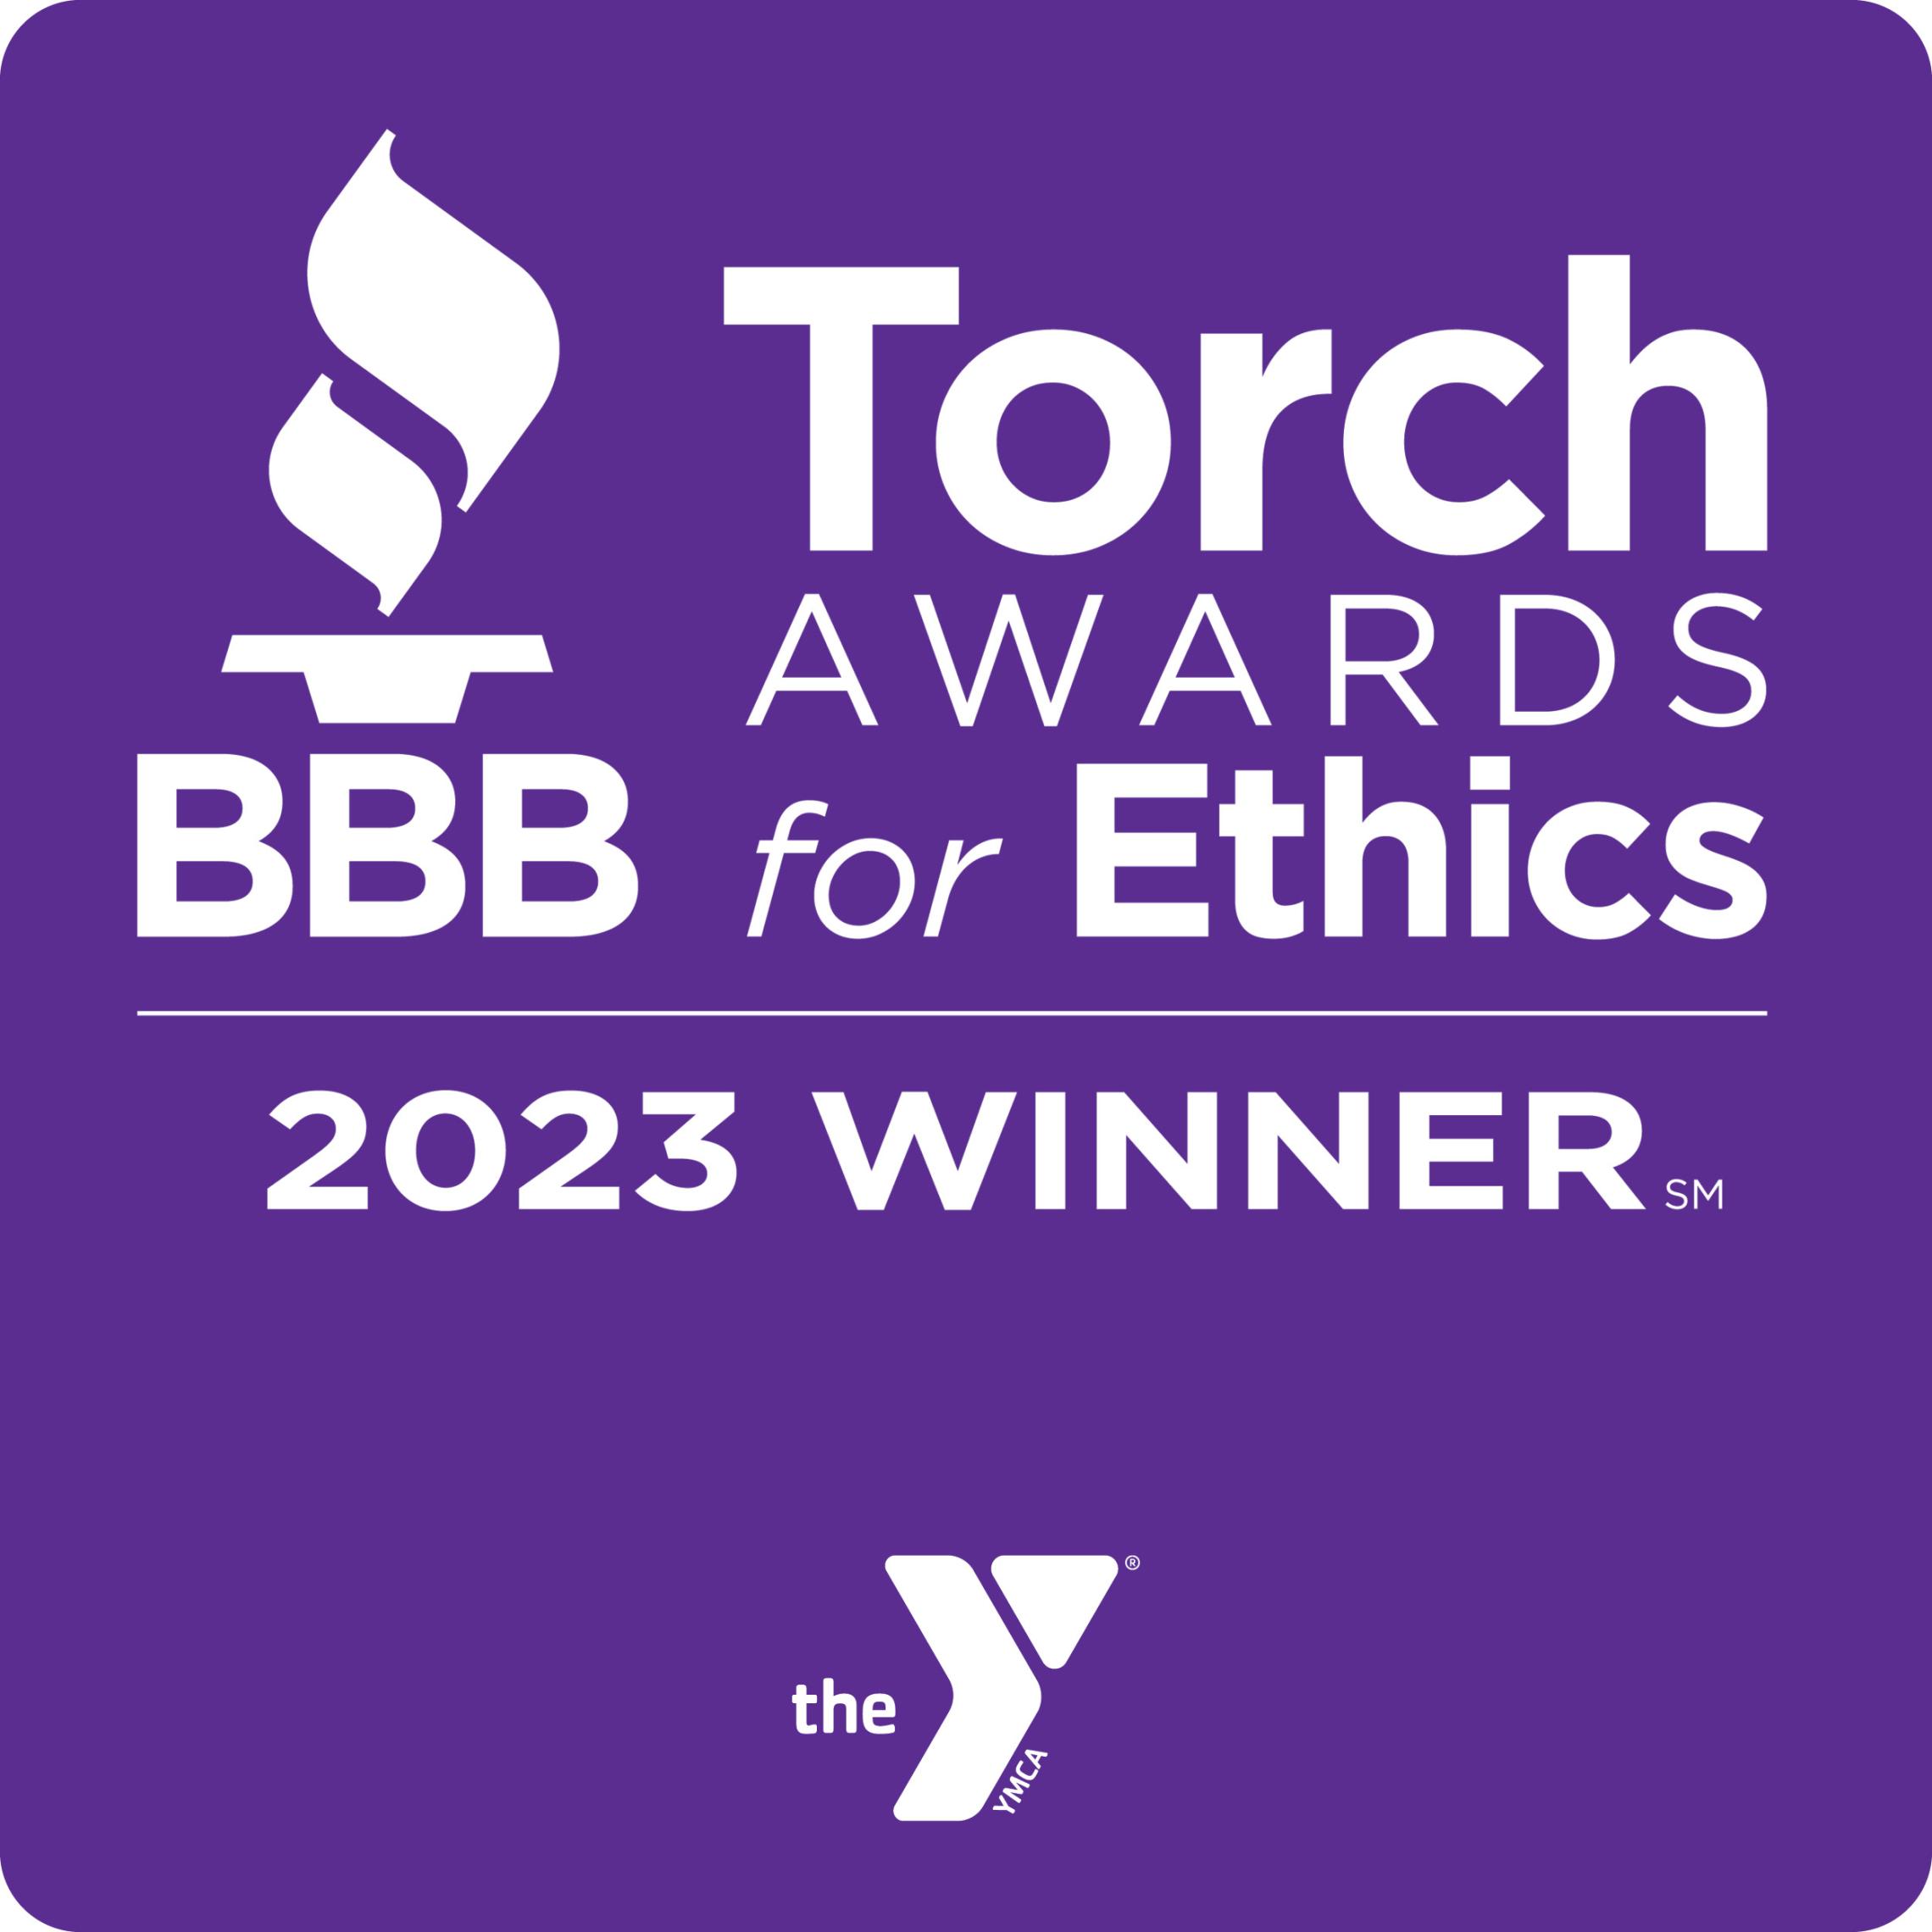 BBB Torch Award logo